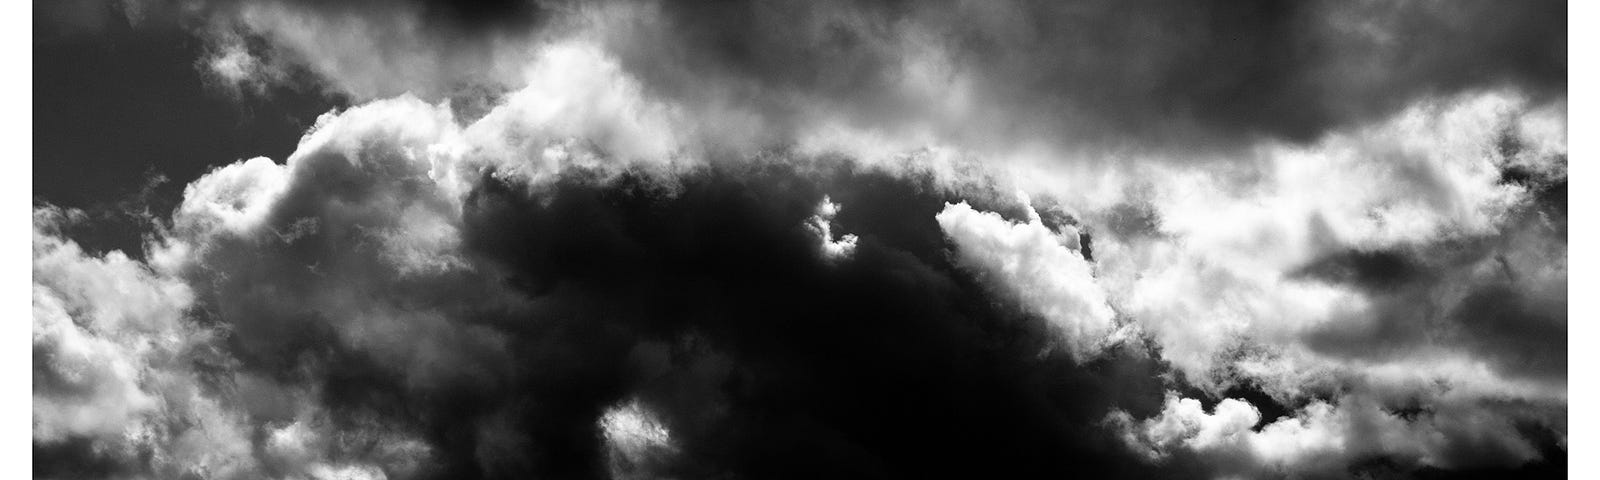 Title Contemporary art geographic (7)
 The Contemporary Cloud Photographer
 Contemporary Cloud Photography By Visual Contemporary Fine Artist Photographer Robert Ireland